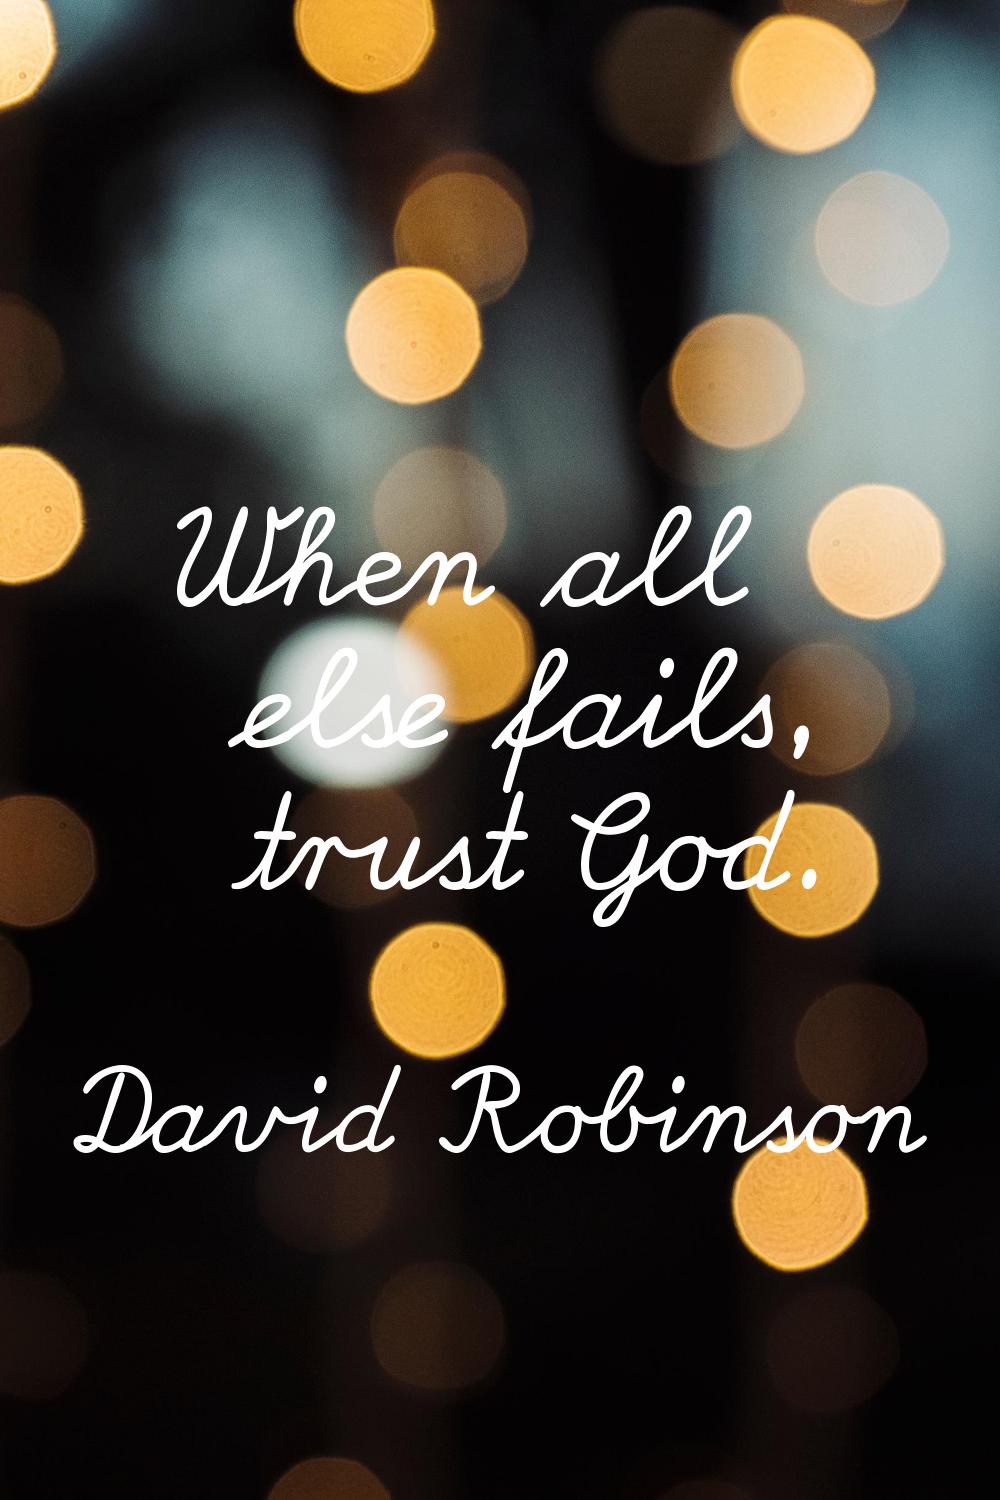 When all else fails, trust God.